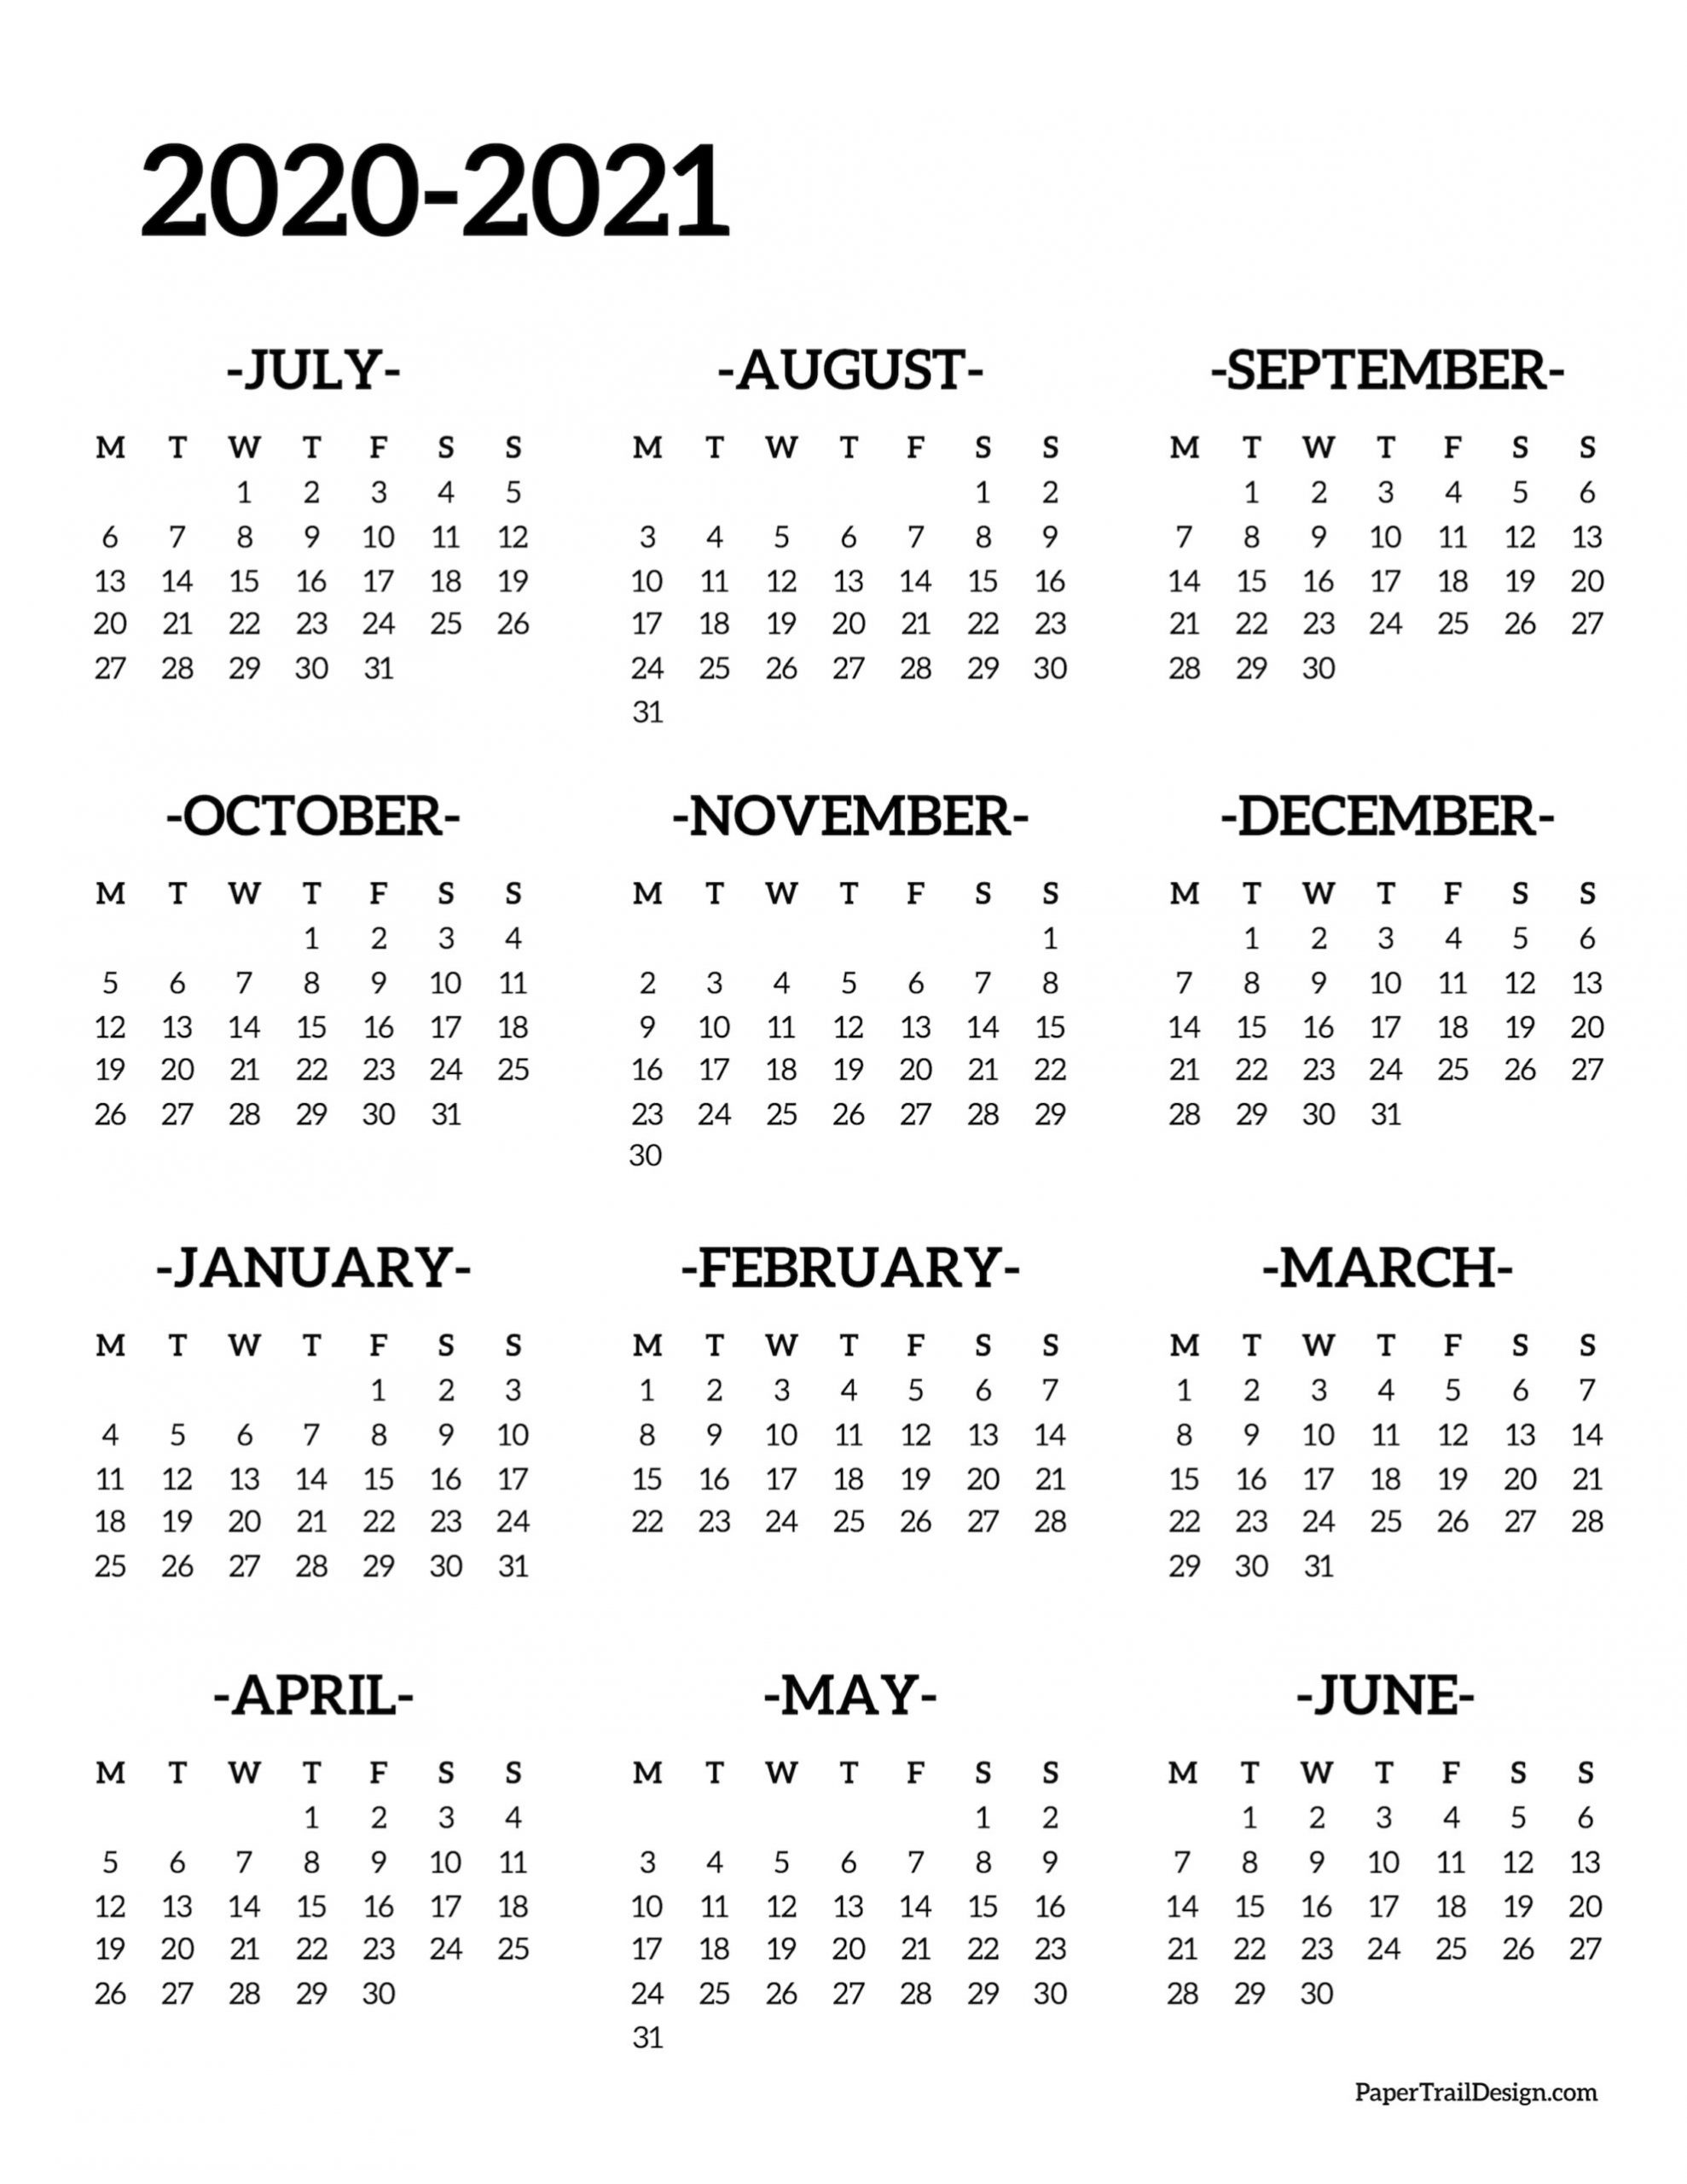 2020-2021 School Year Calendar Free Printable | Paper Trail